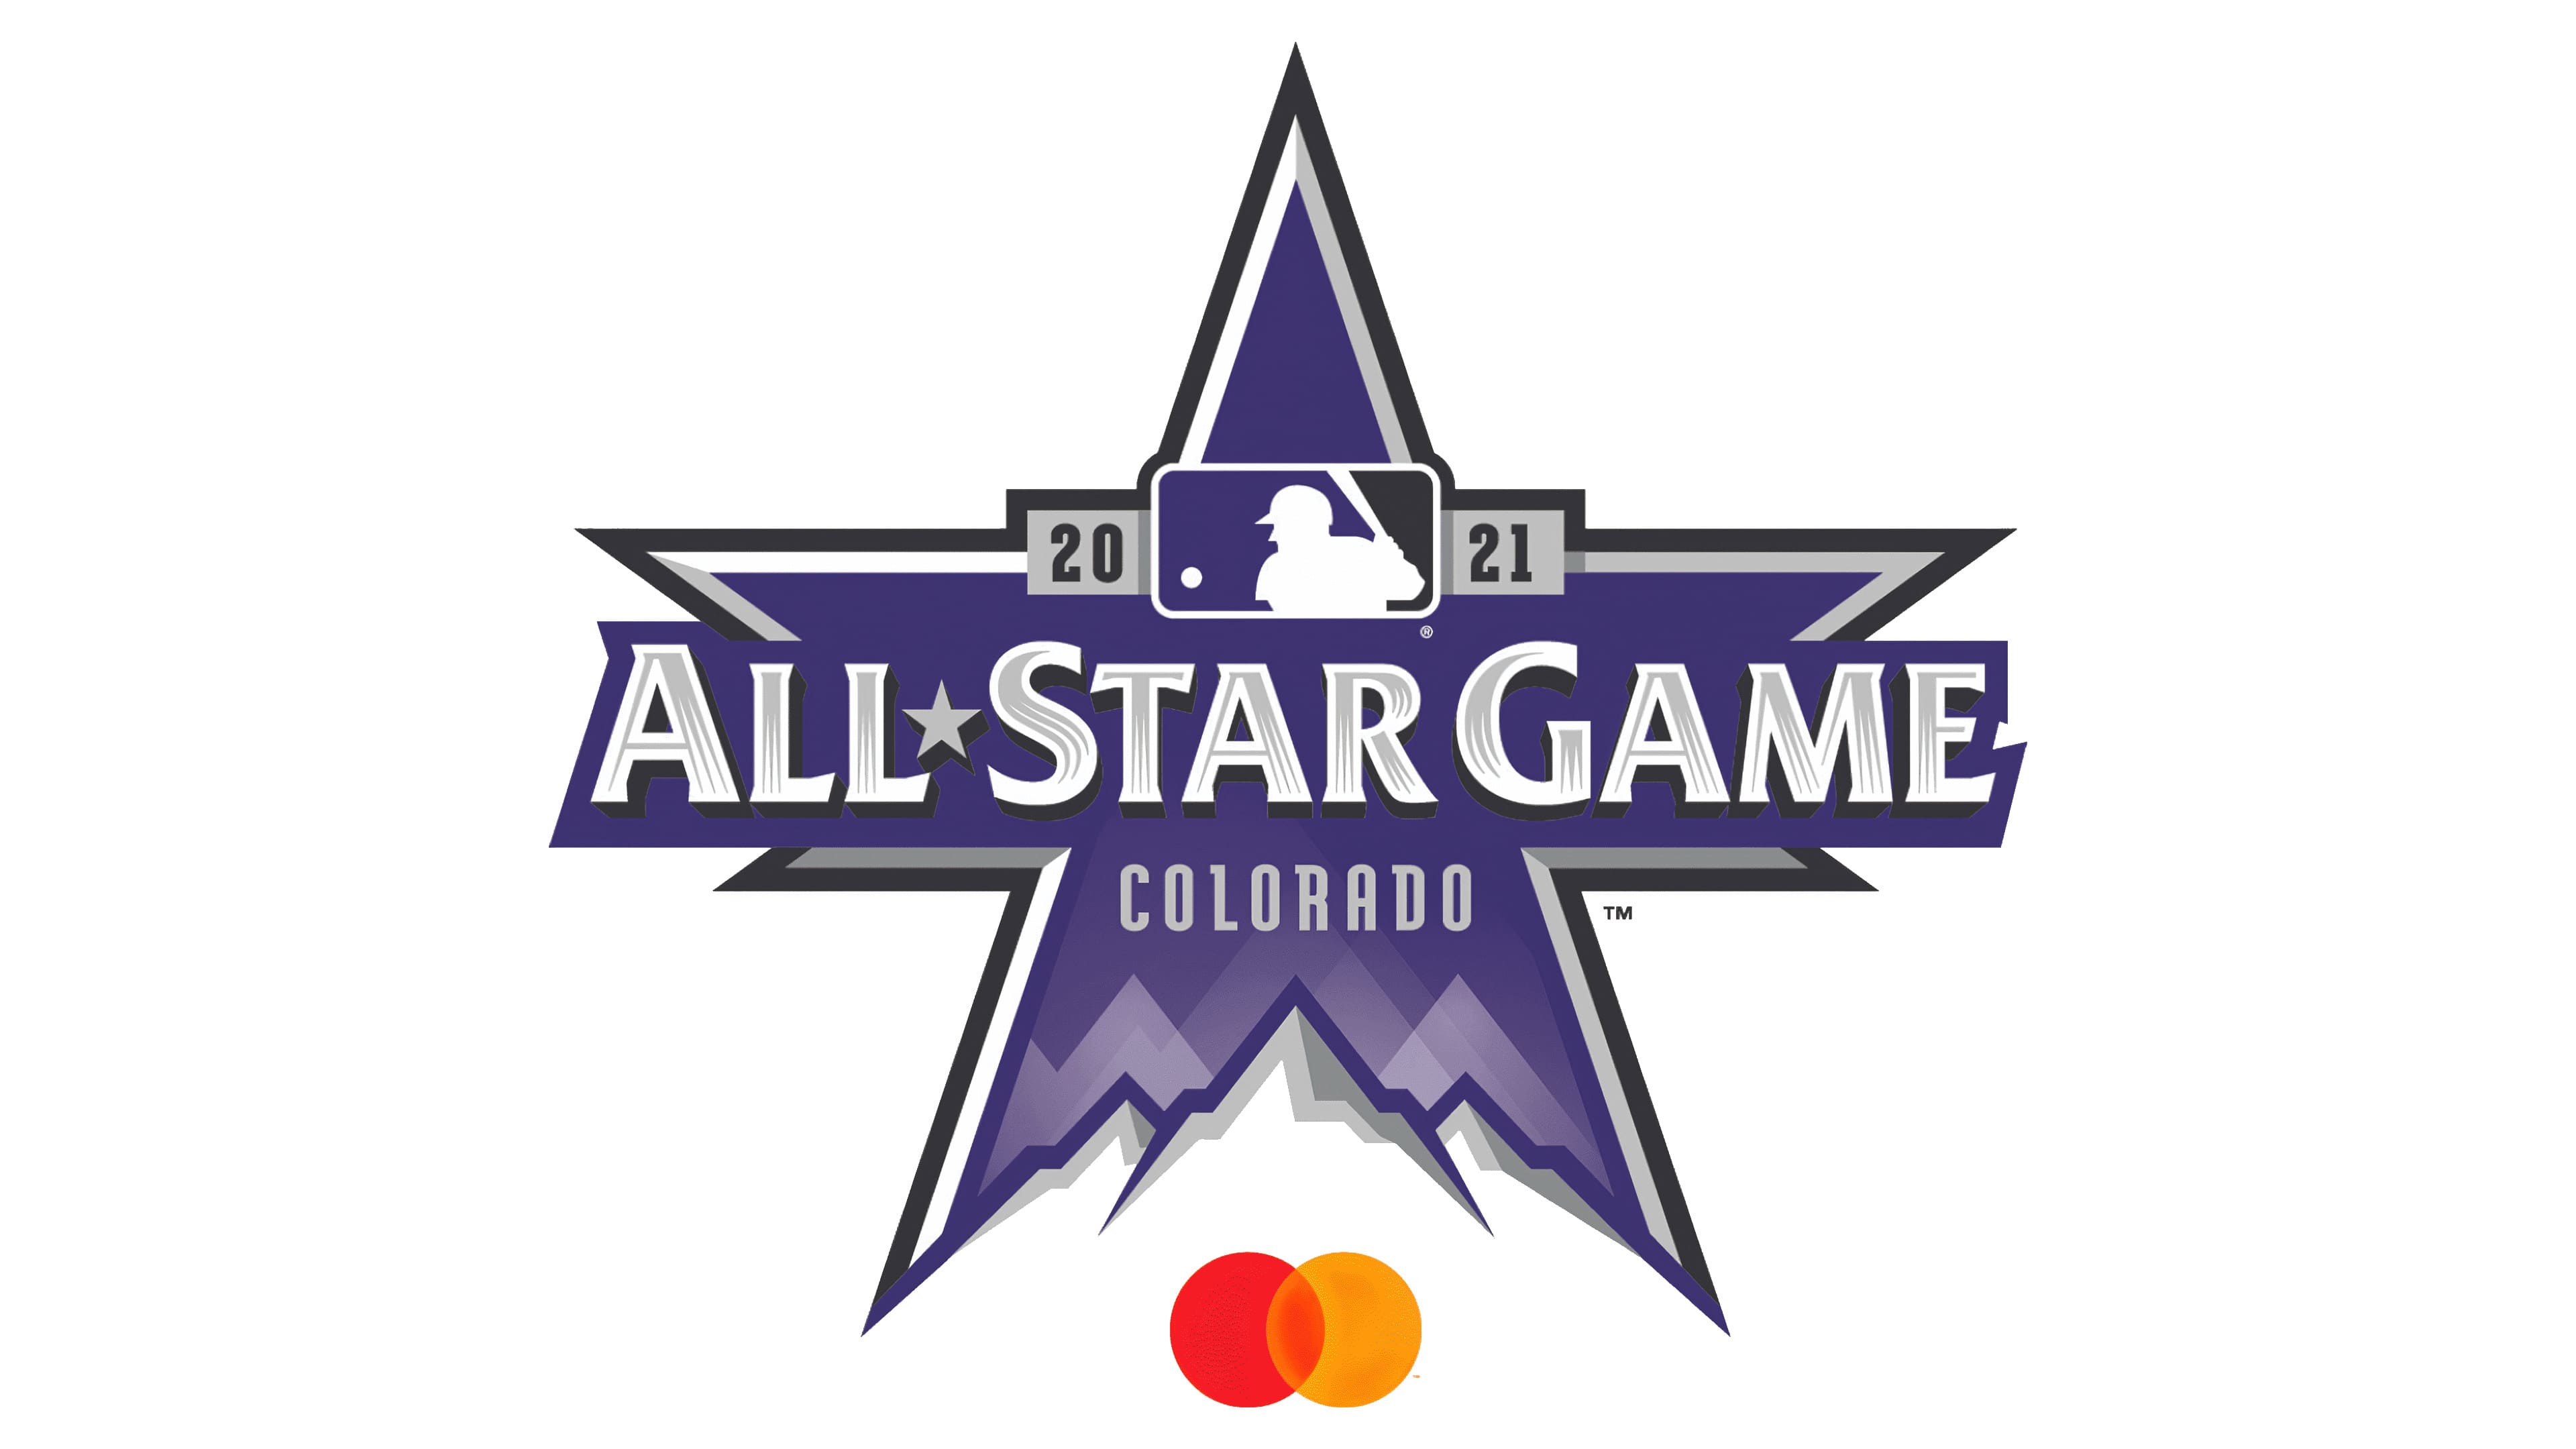 Games stars com. MLB all-Star game. All Star game Baseball. Star game logo. All Stars лого.